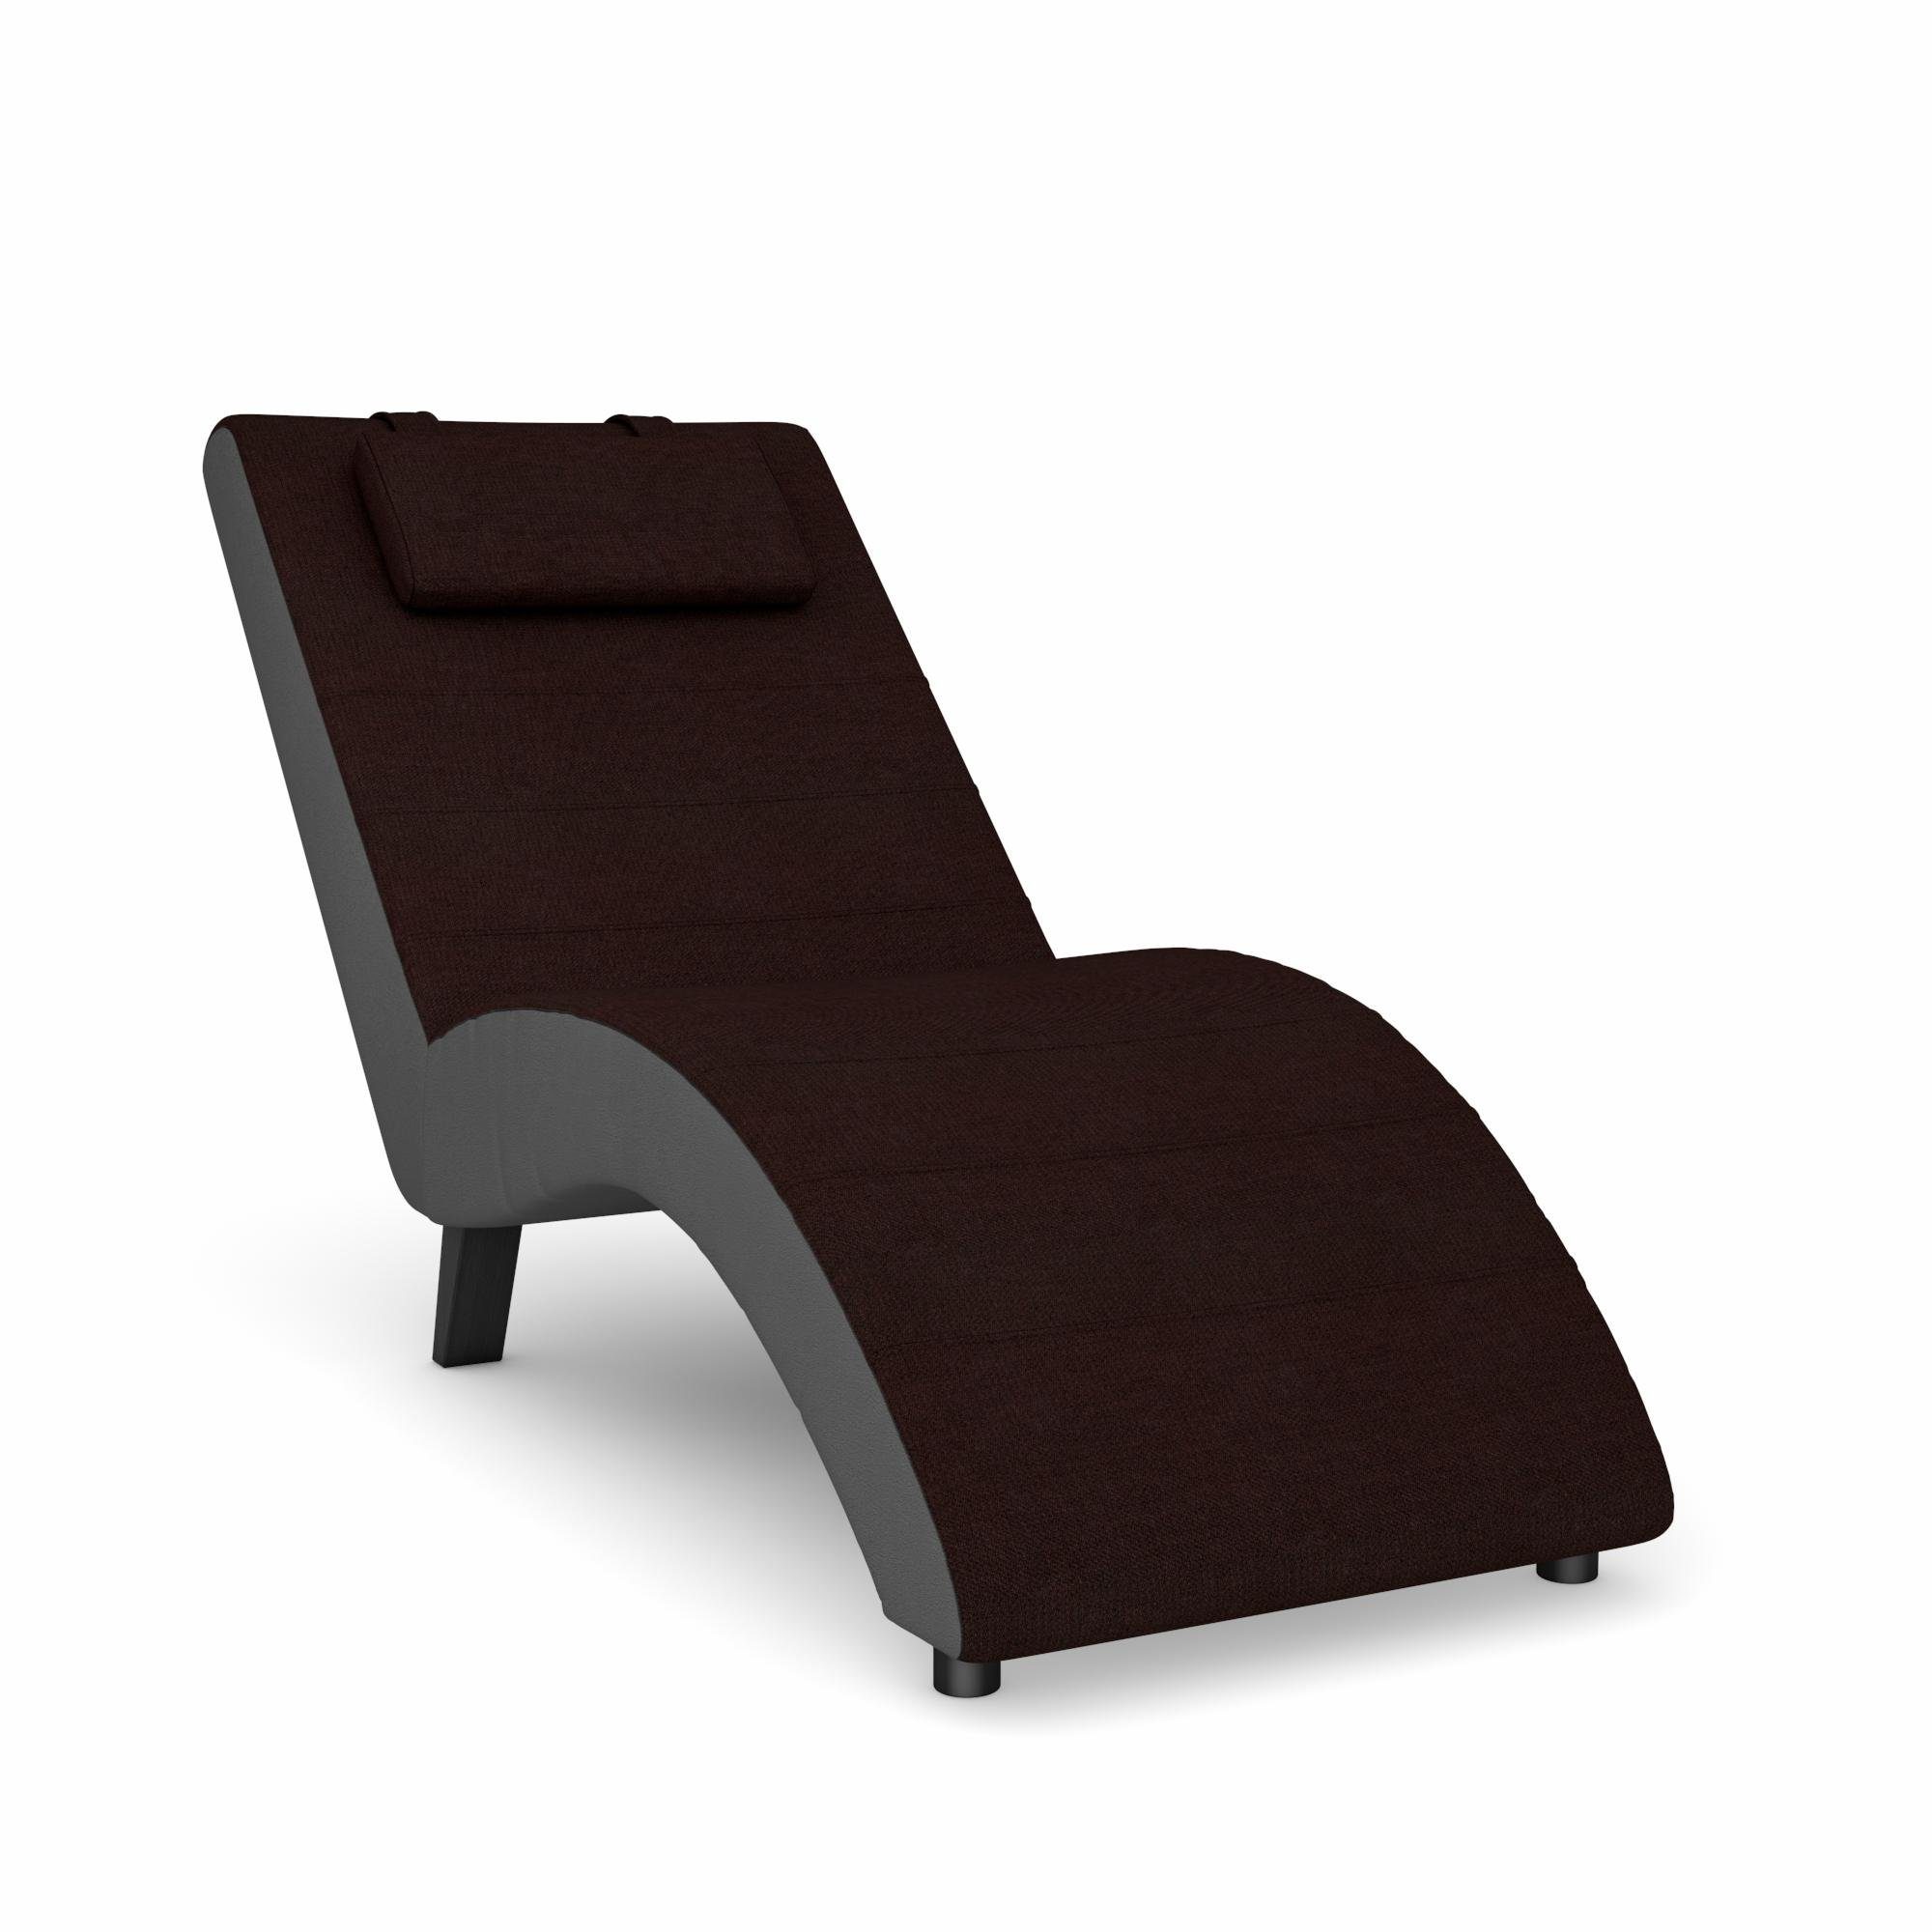 Otto - Max Winzer MAX WINZER® build-a-chair stretcher Nova, inclusief nekkussen, om zelf te stylen